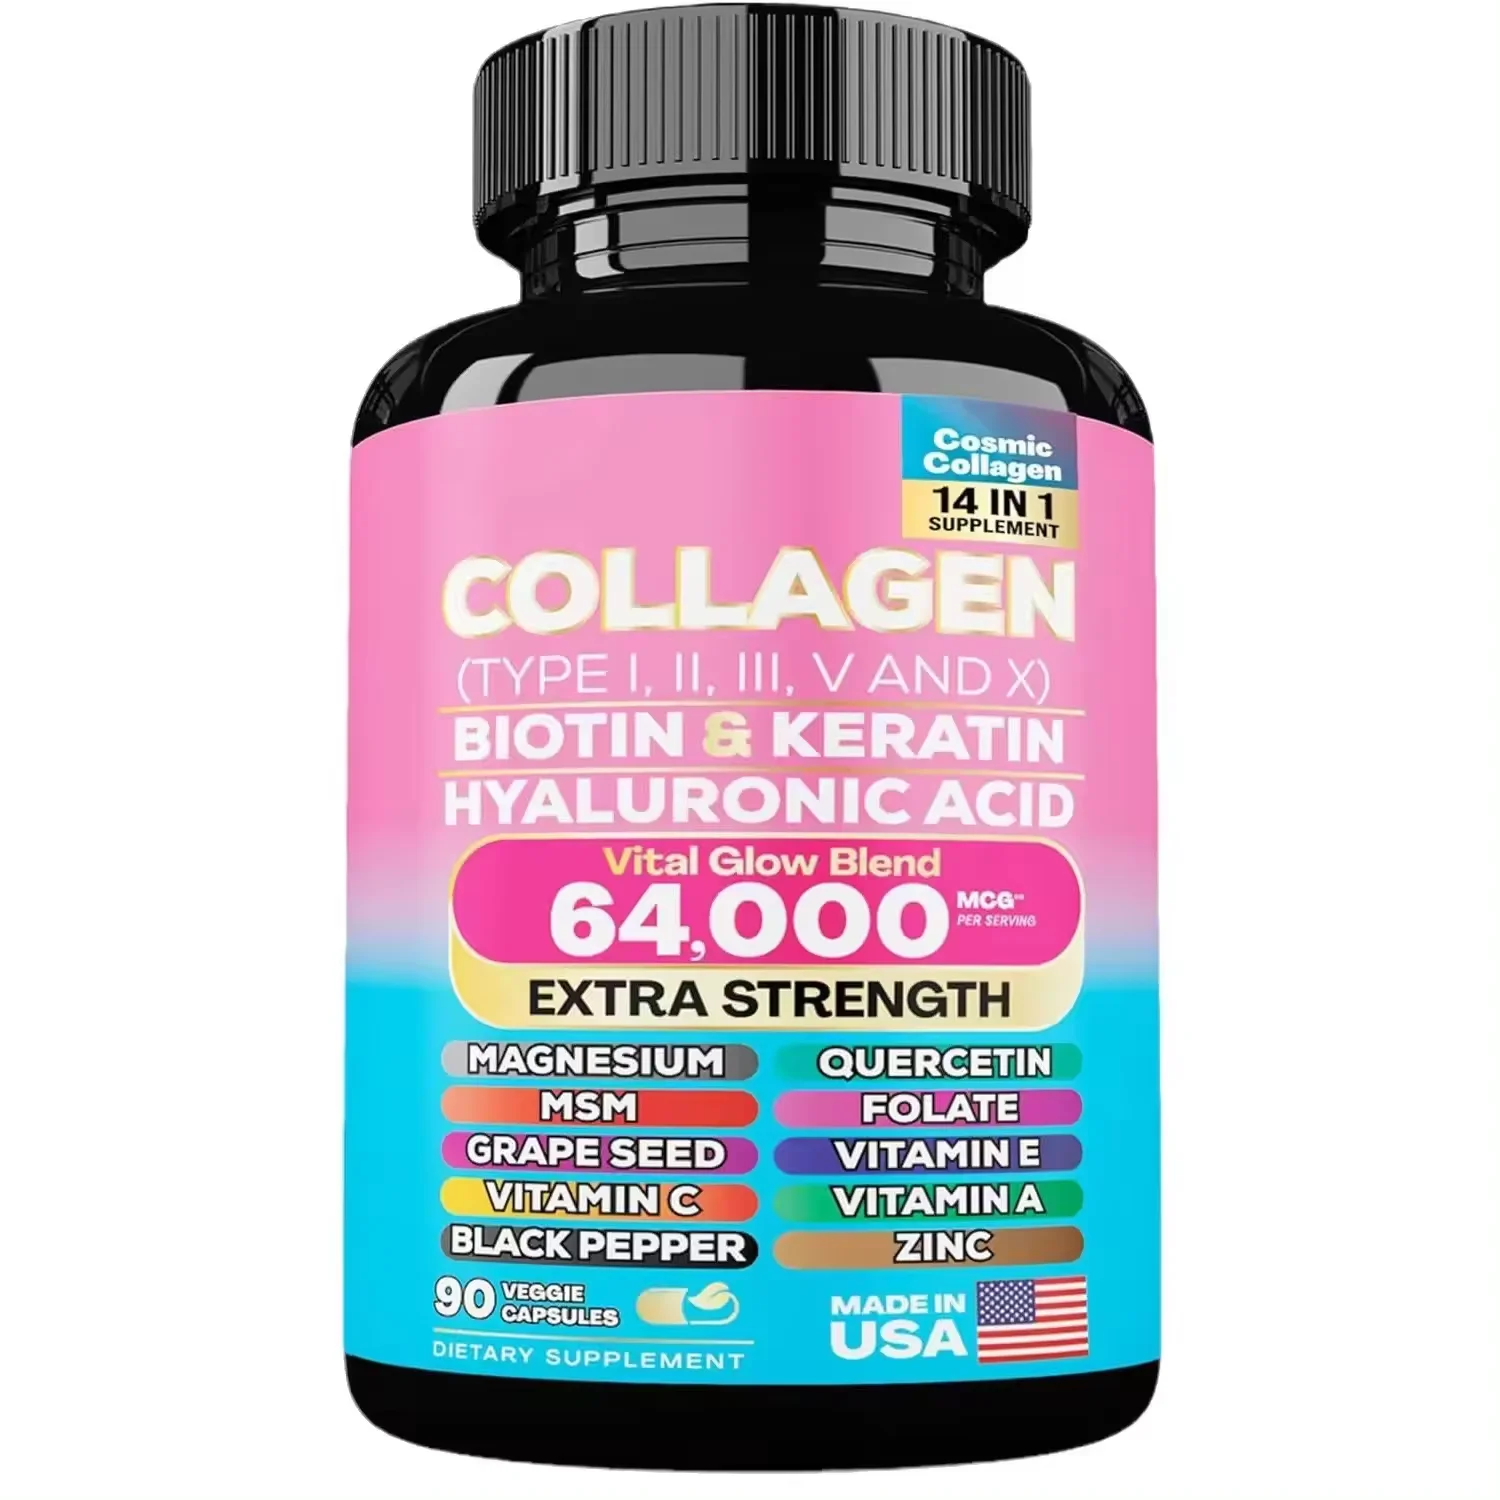 Collagen Biotin Keratin Hyaluronic Acid capsules Vital Glow Blend